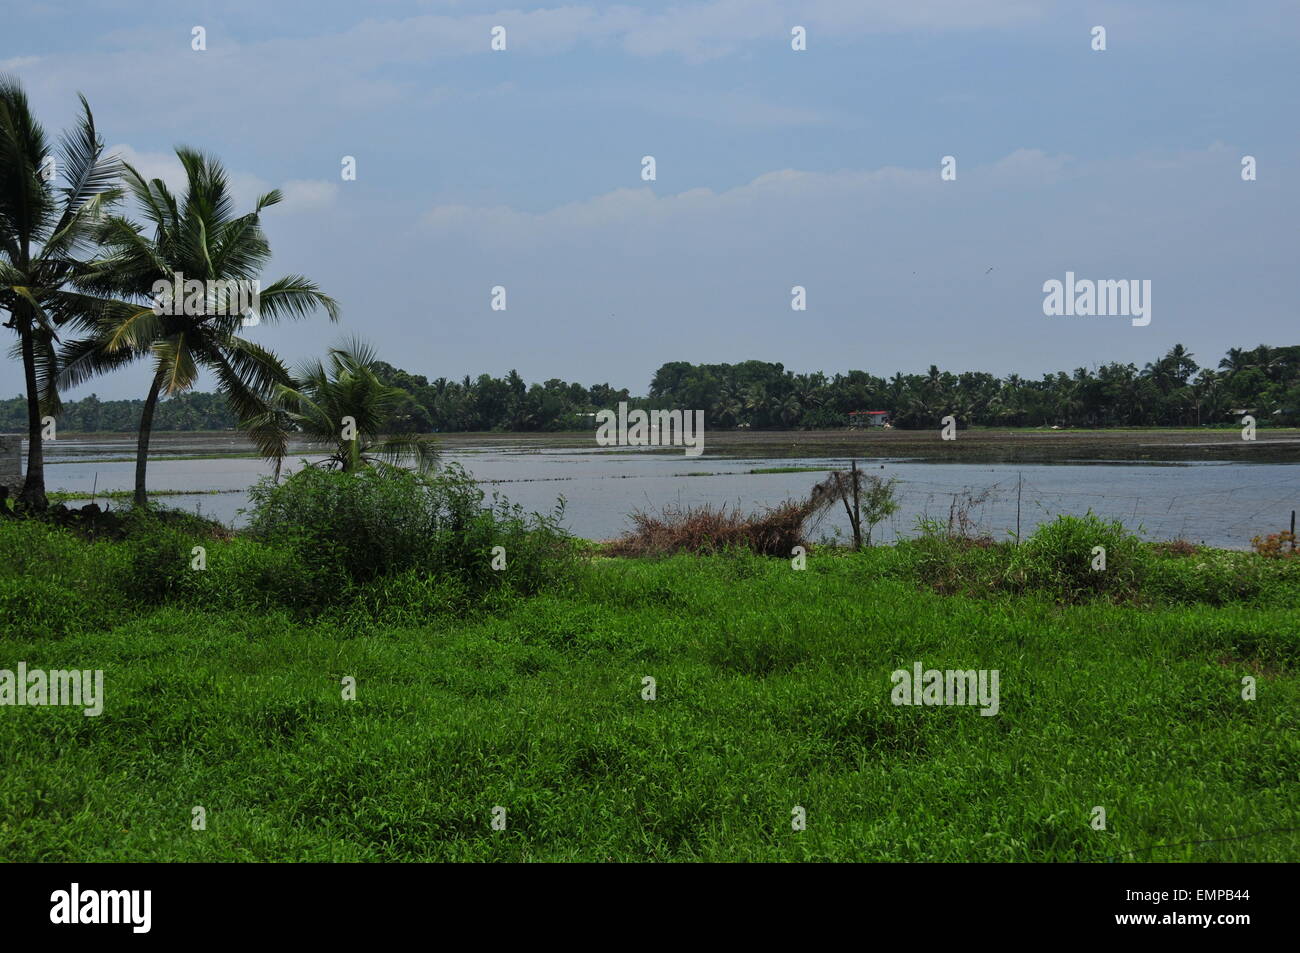 Beauty of kerala land scape. Stock Photo